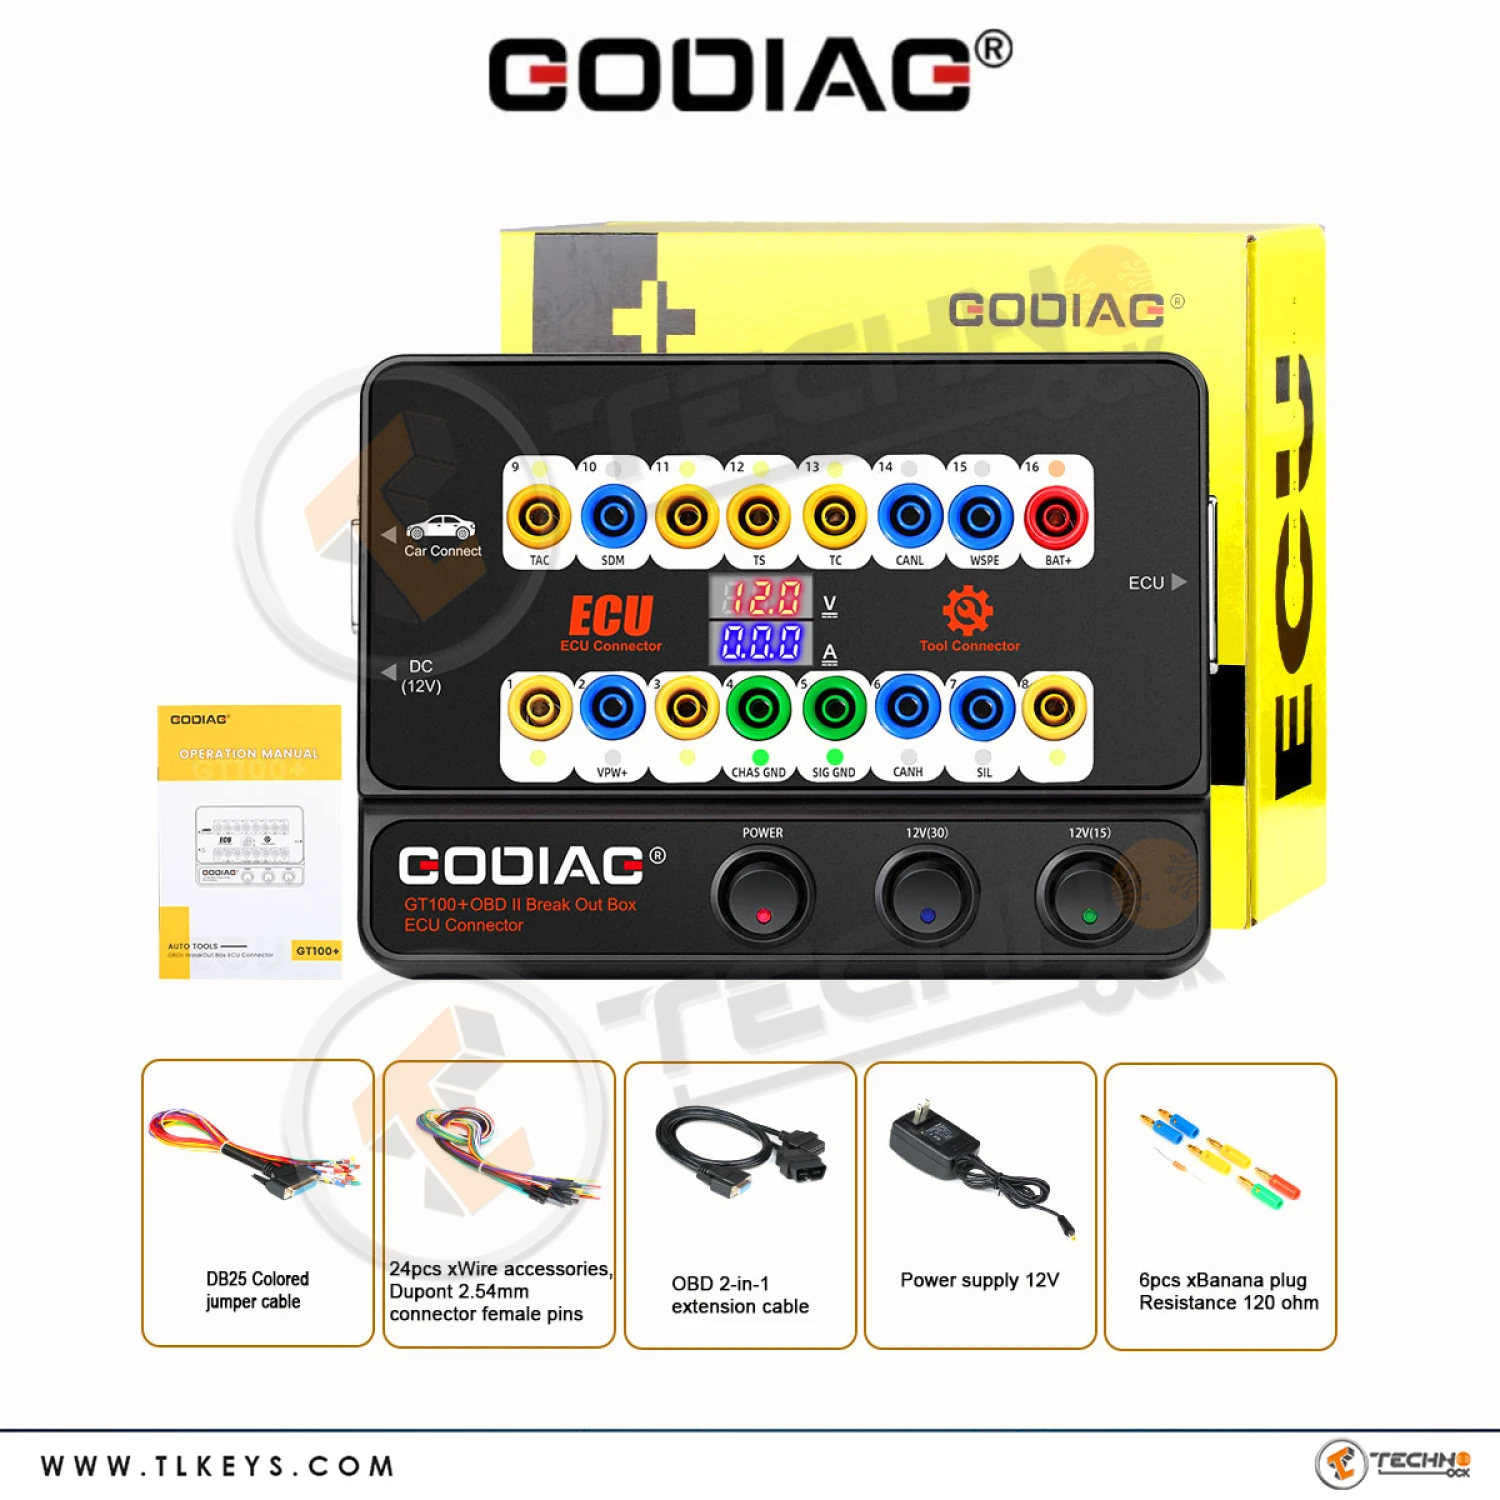 Godiag GT100+ OBDII Breakout Box